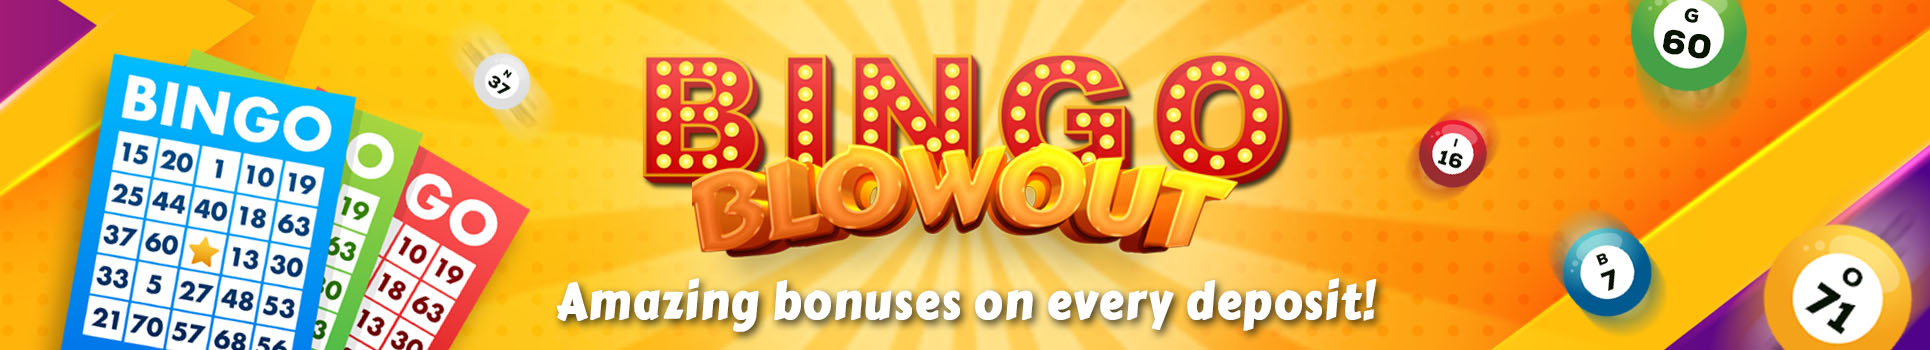 Bingo Blowout banner